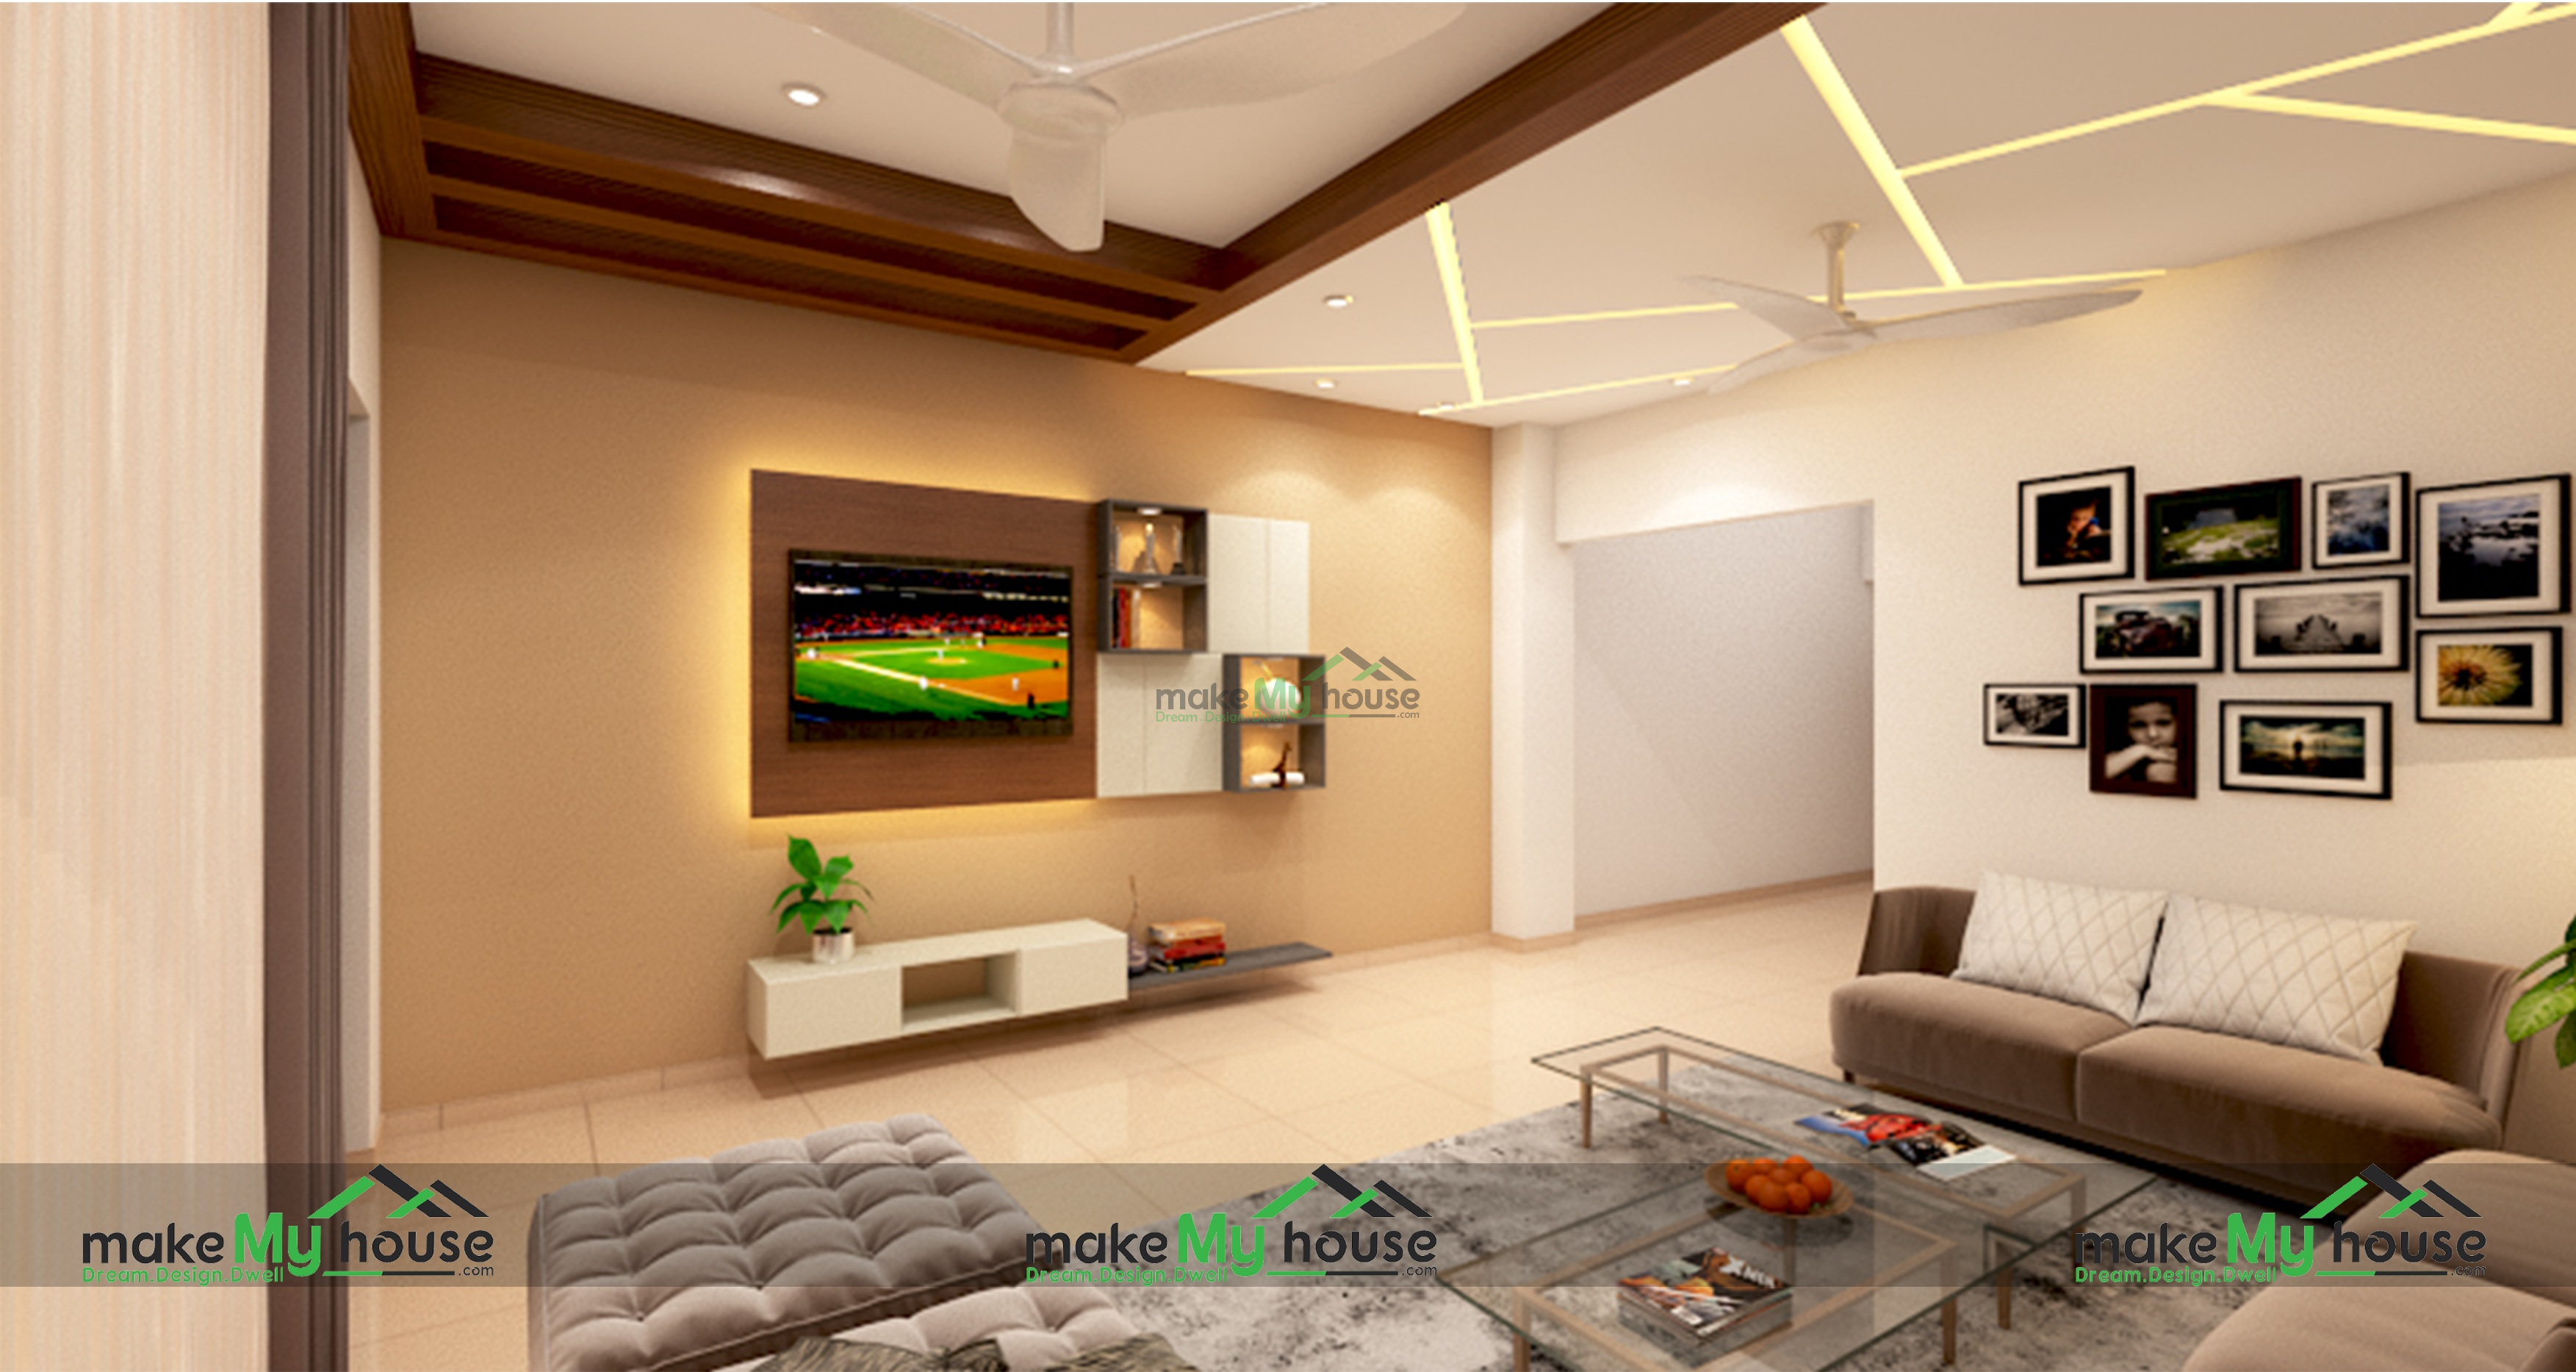 20x60 Home Interior Design 2bhk Interior Design Bedroom Kitchen Living Room Design